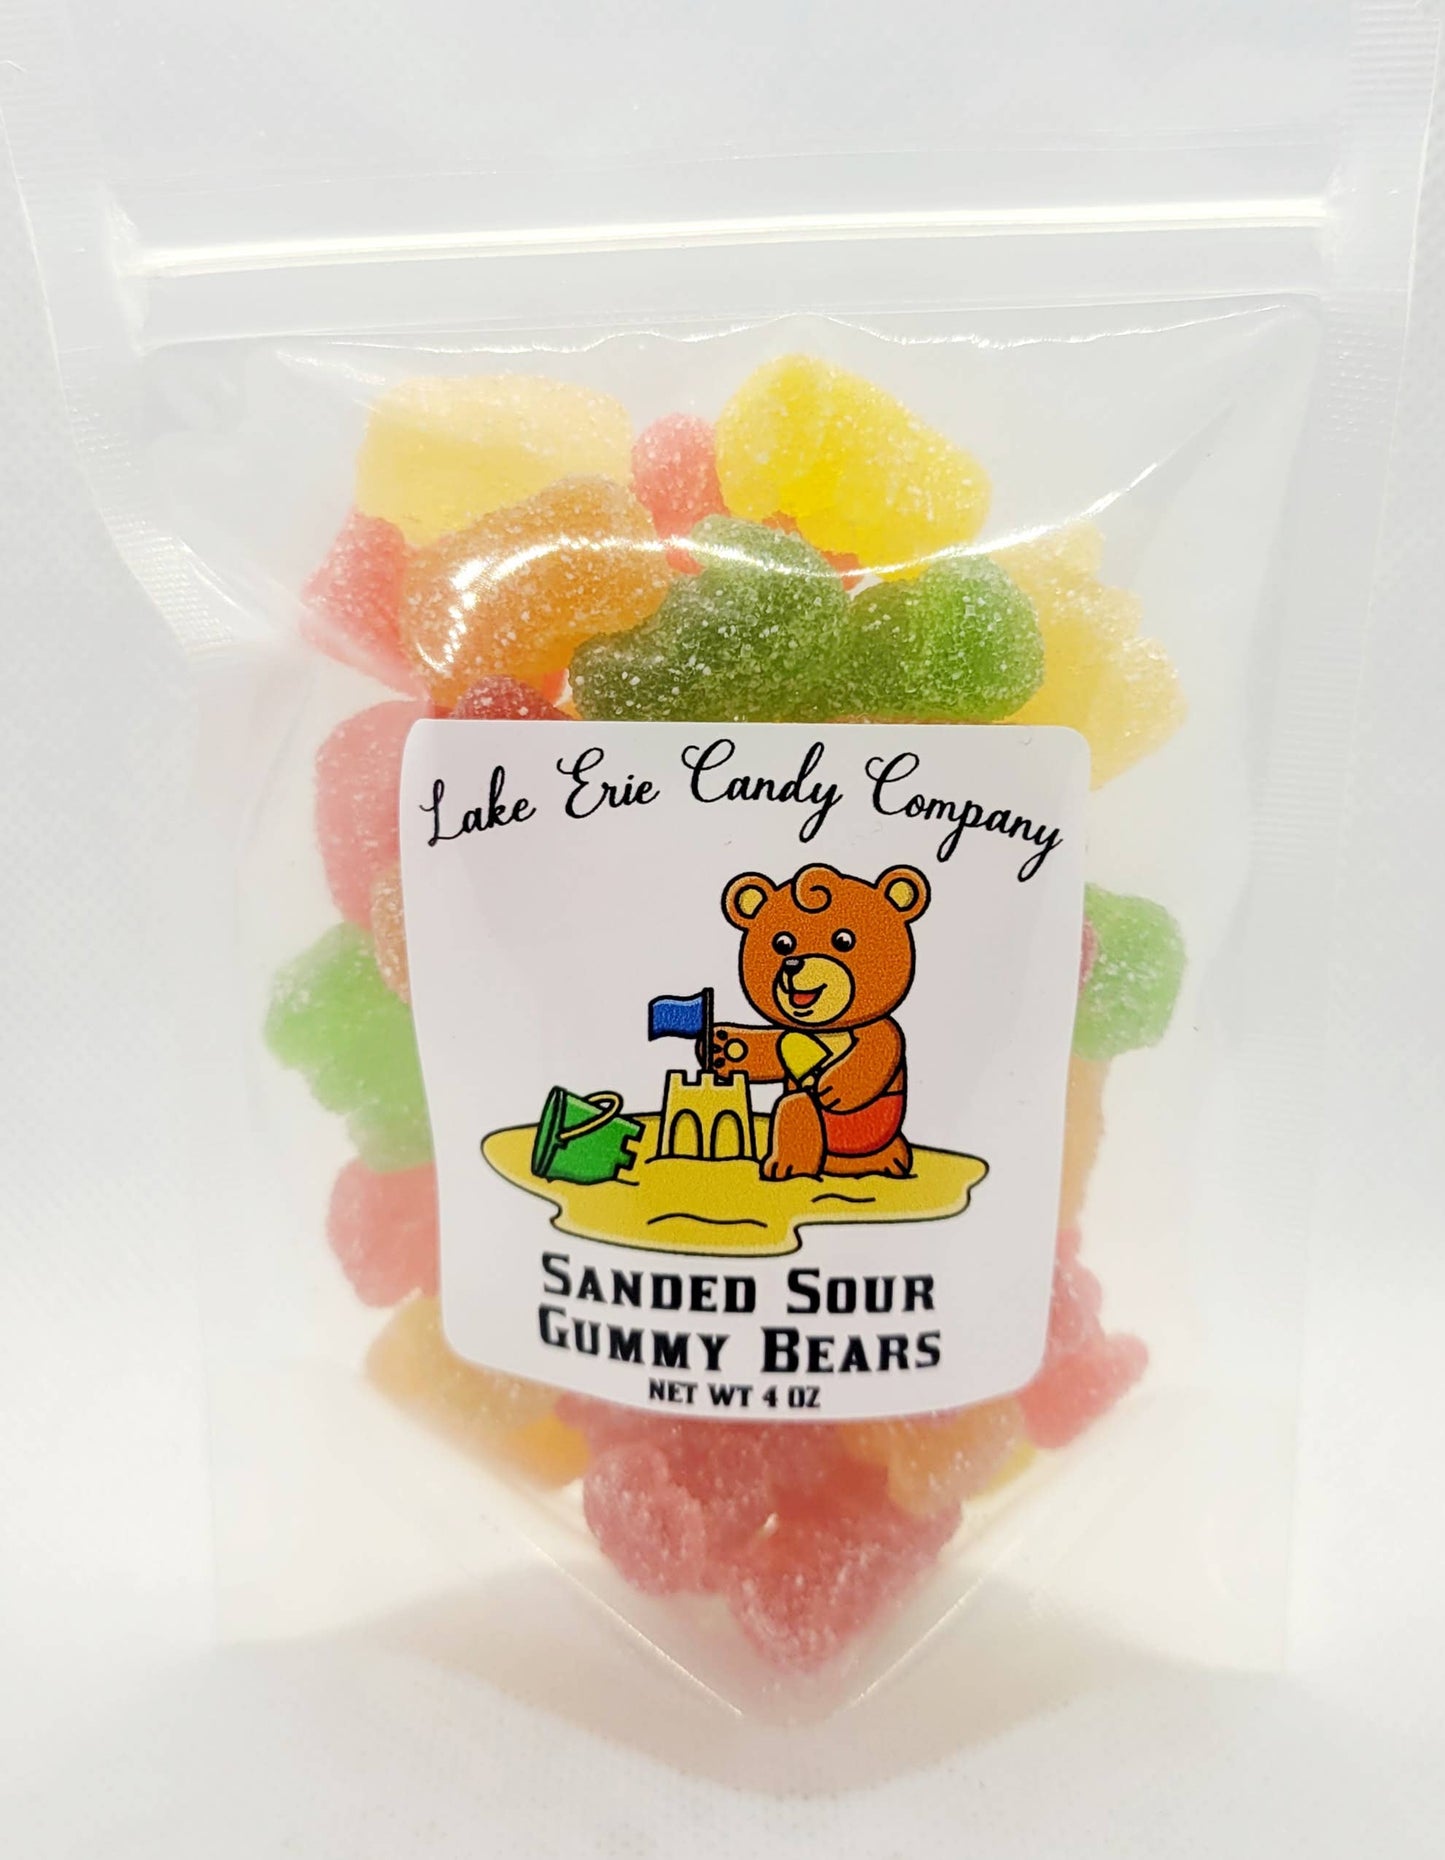 Sanded Sour Gummy Bears